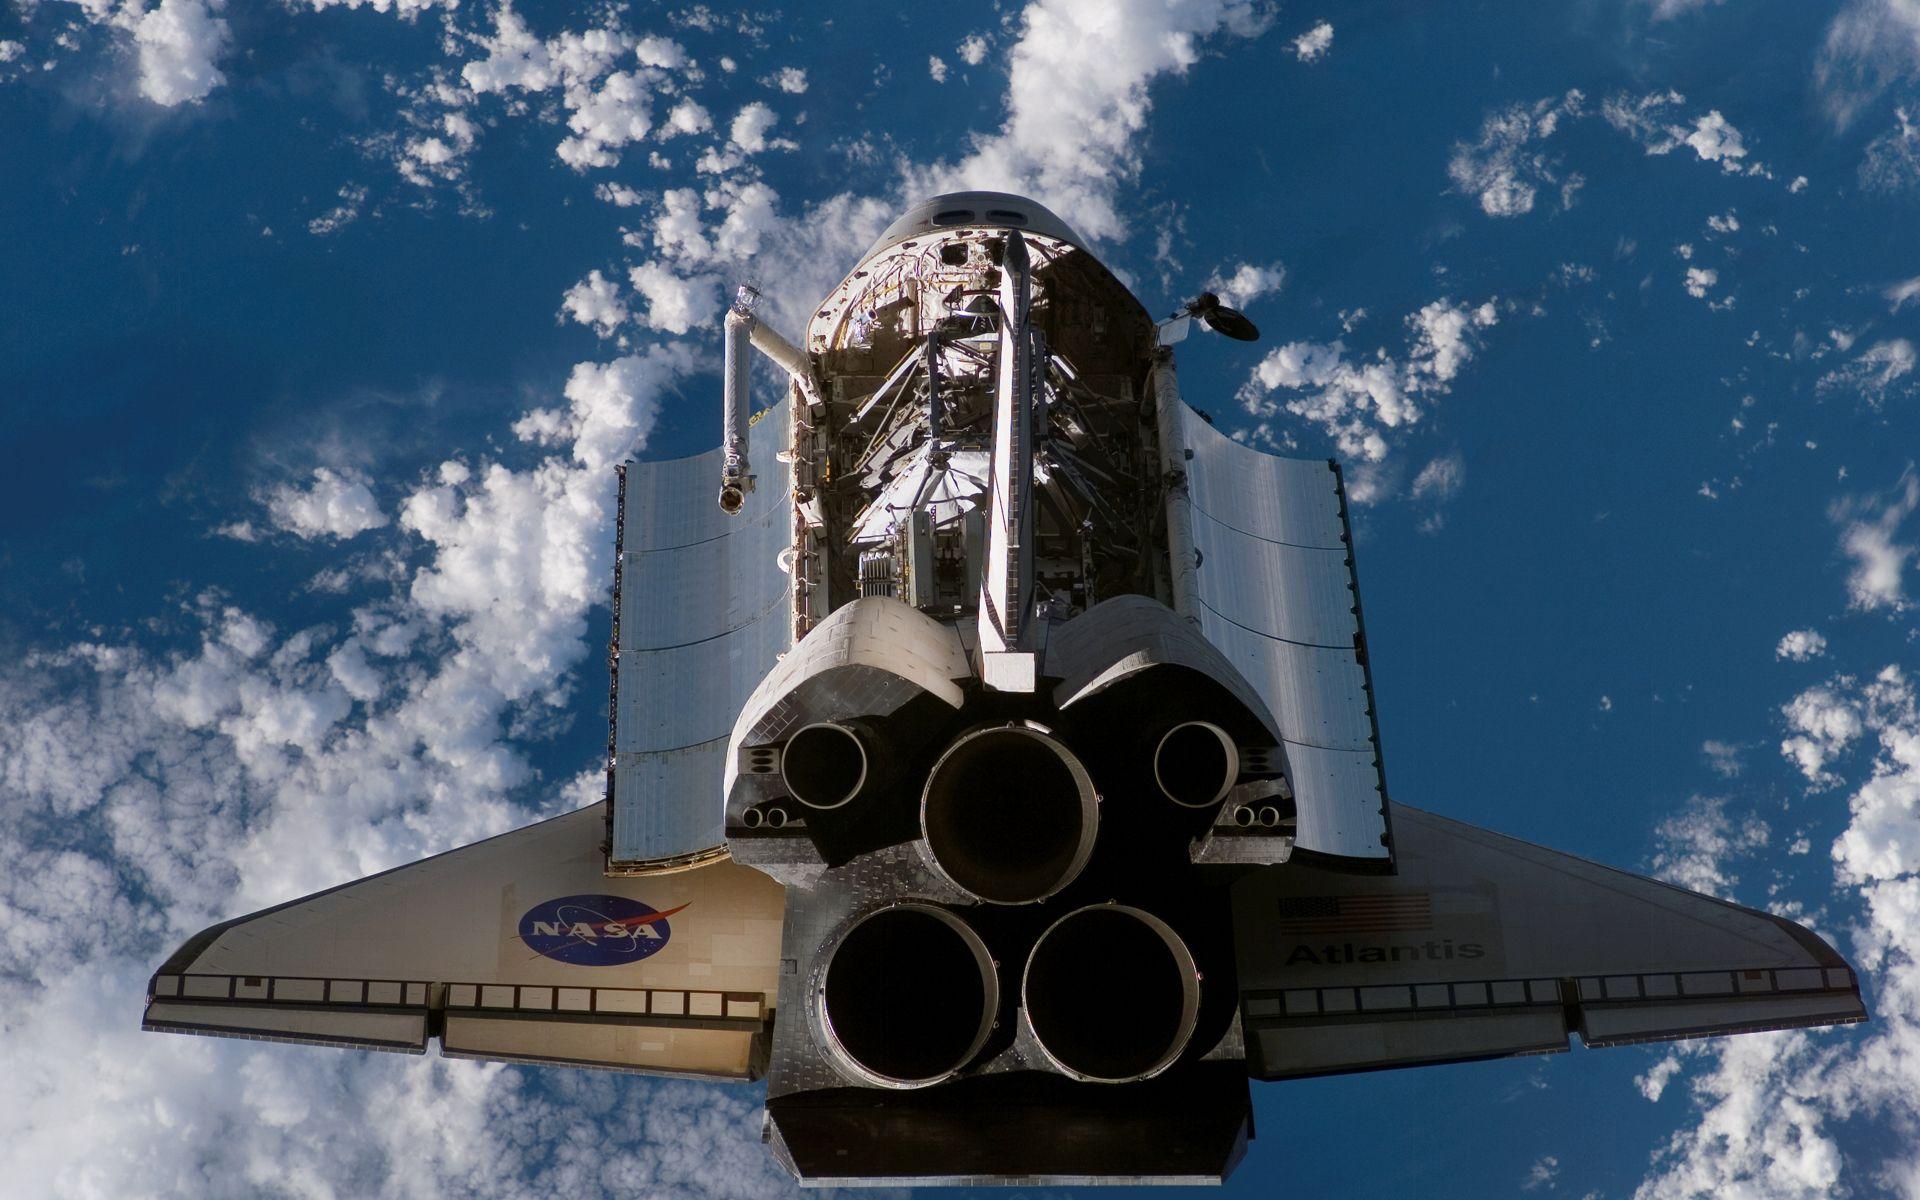 ships rockets Space Shuttle Atlantis NASA vehicles skyscapes